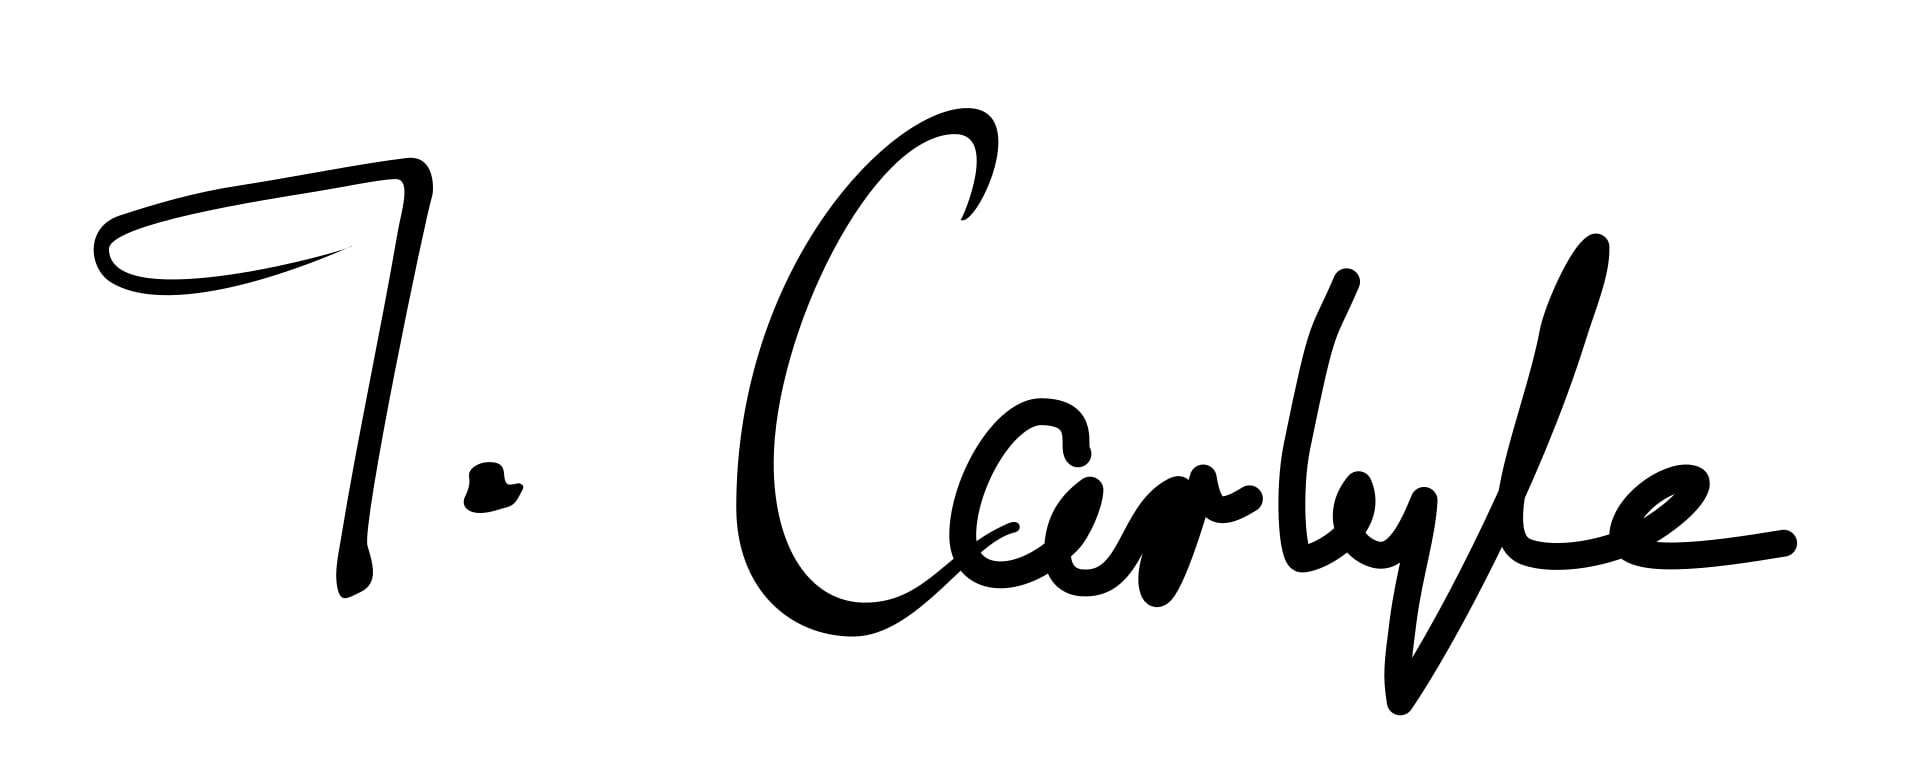 Thomas Carlyle Signature